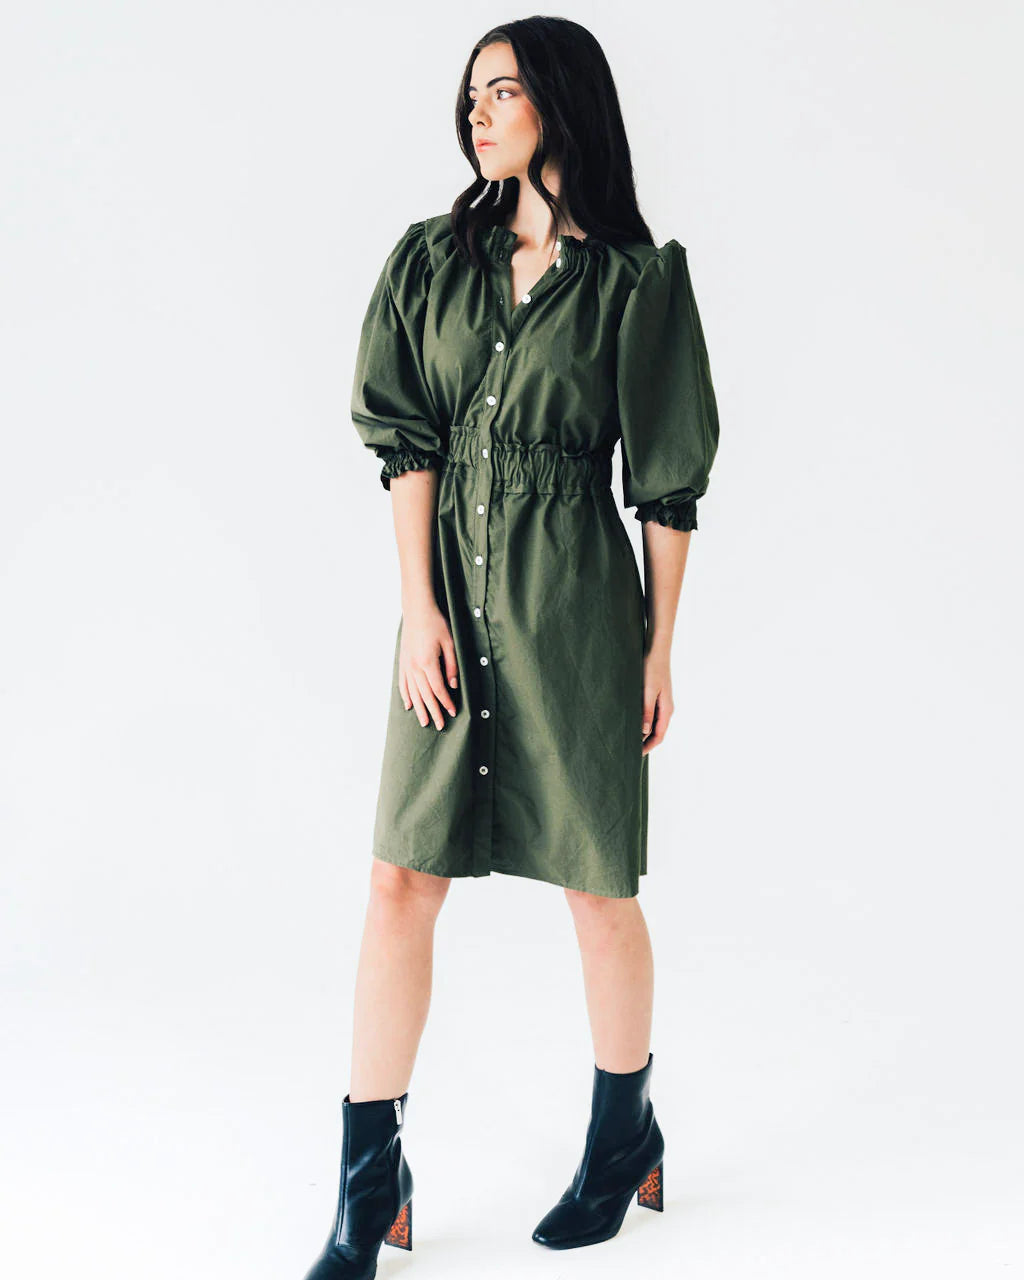 Elastic Collar Dress - Olive Poplin